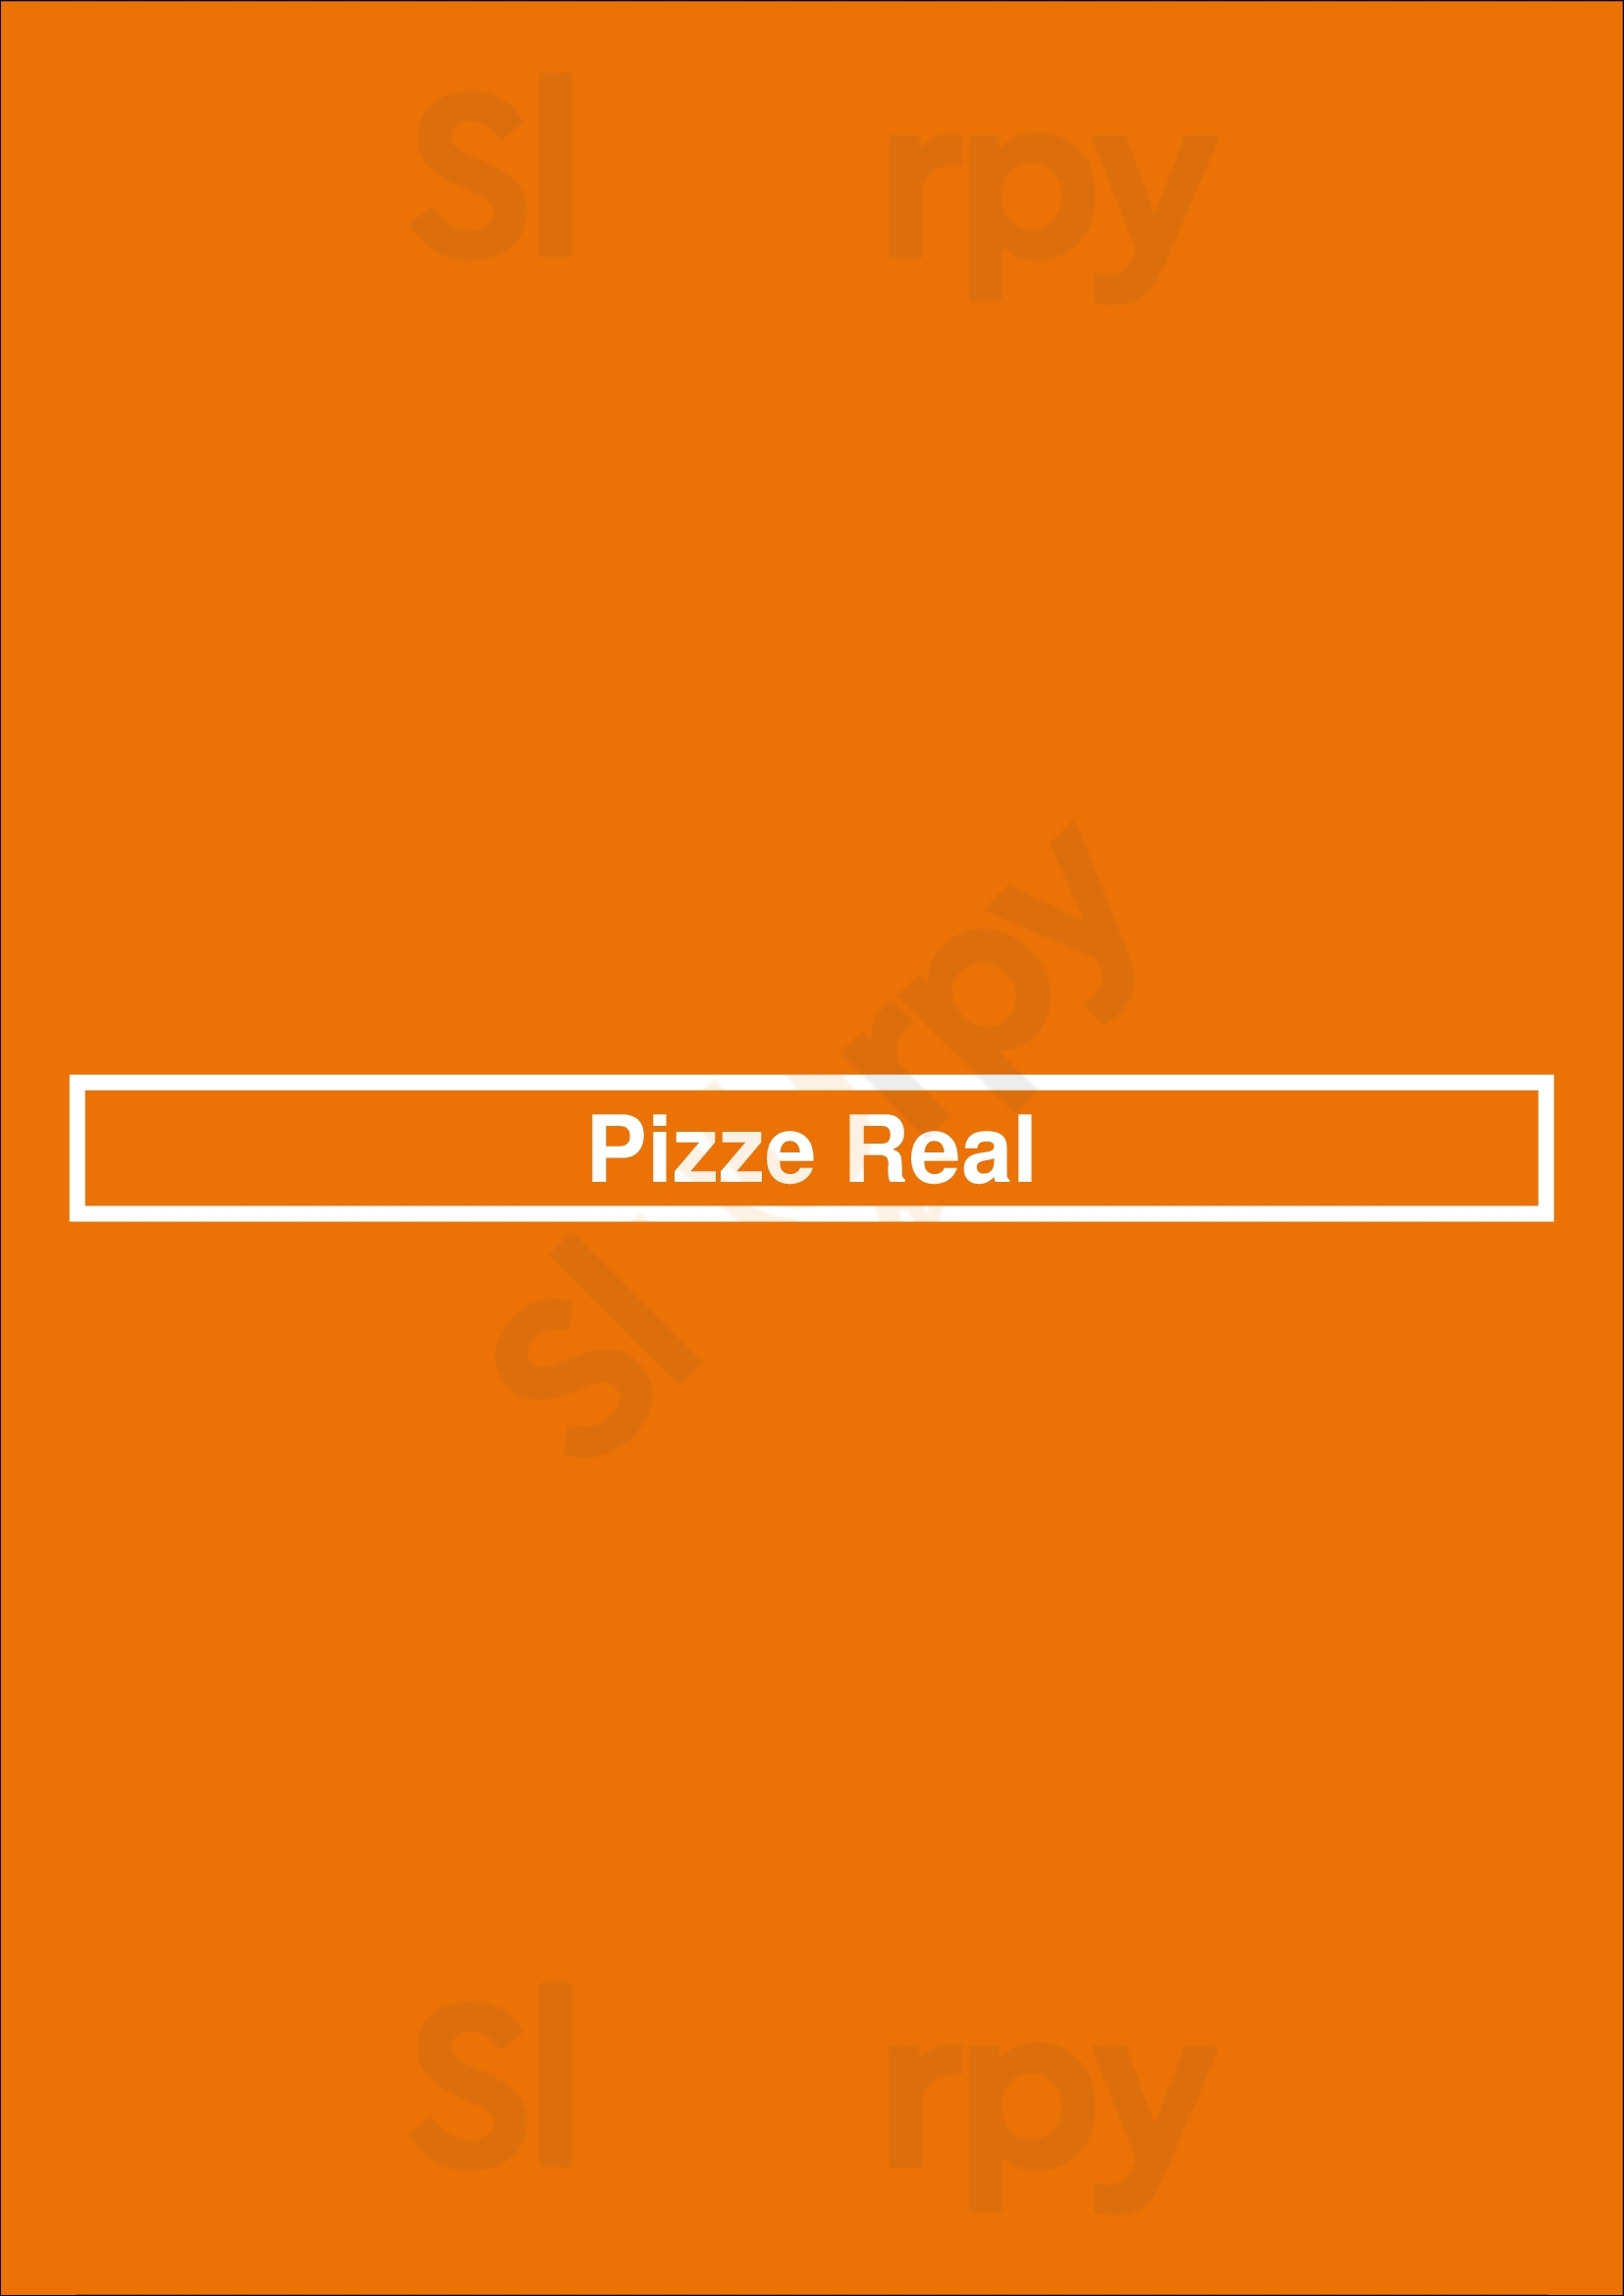 Pizze Real Nashville Menu - 1